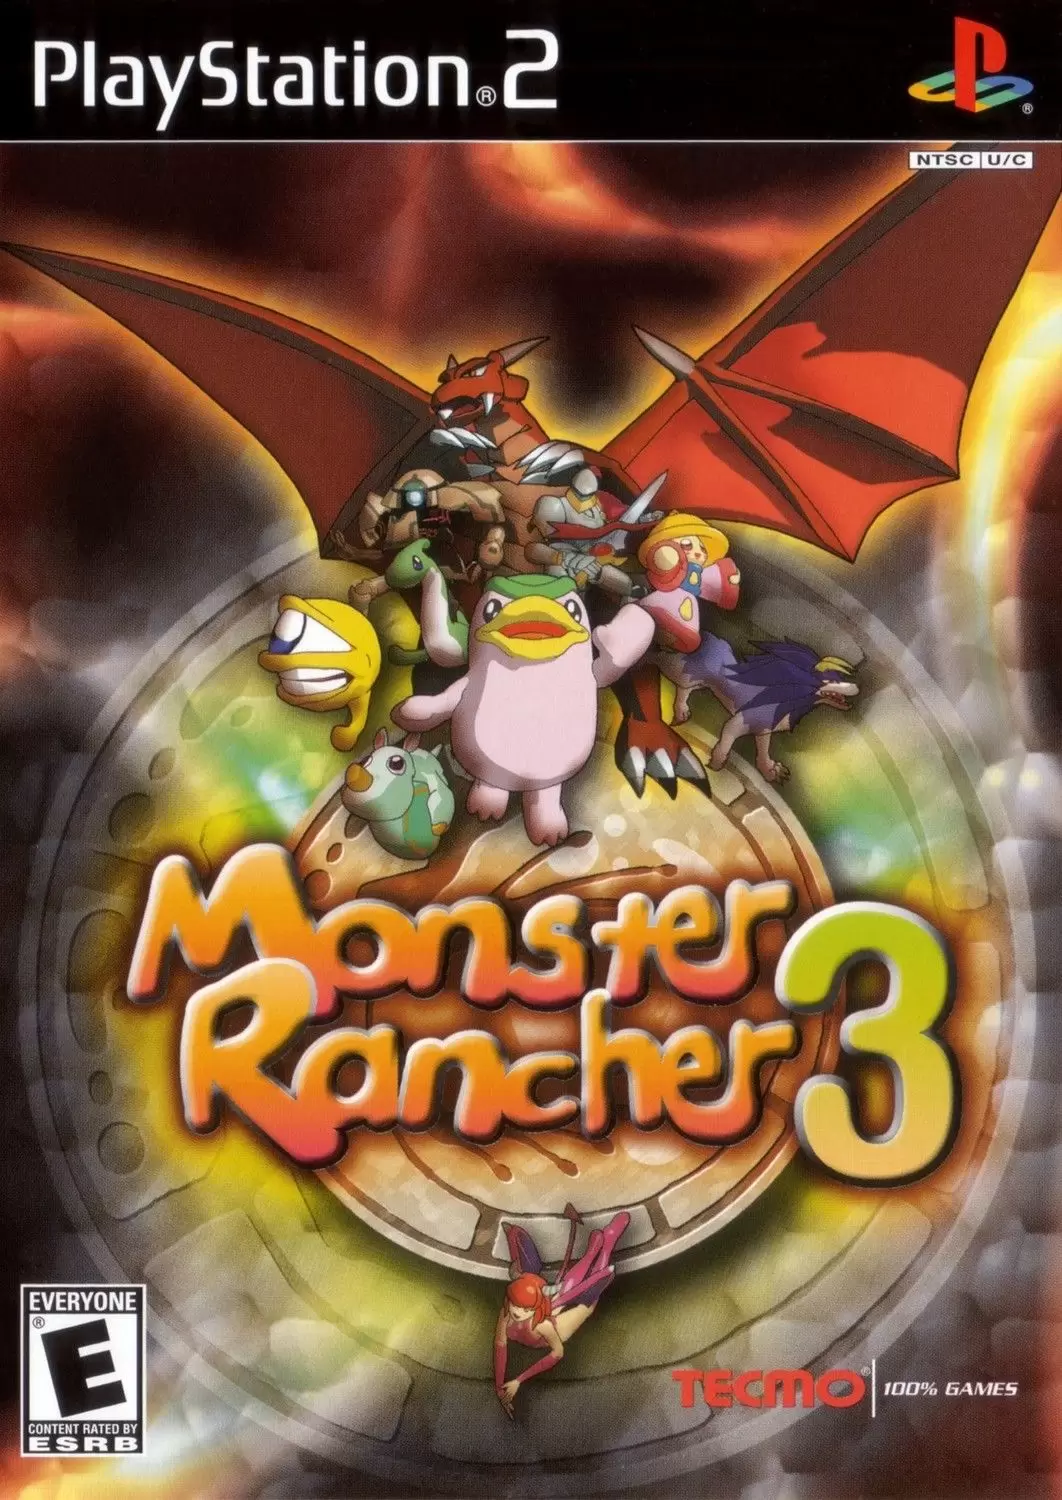 PS2 Games - Monster Rancher 3